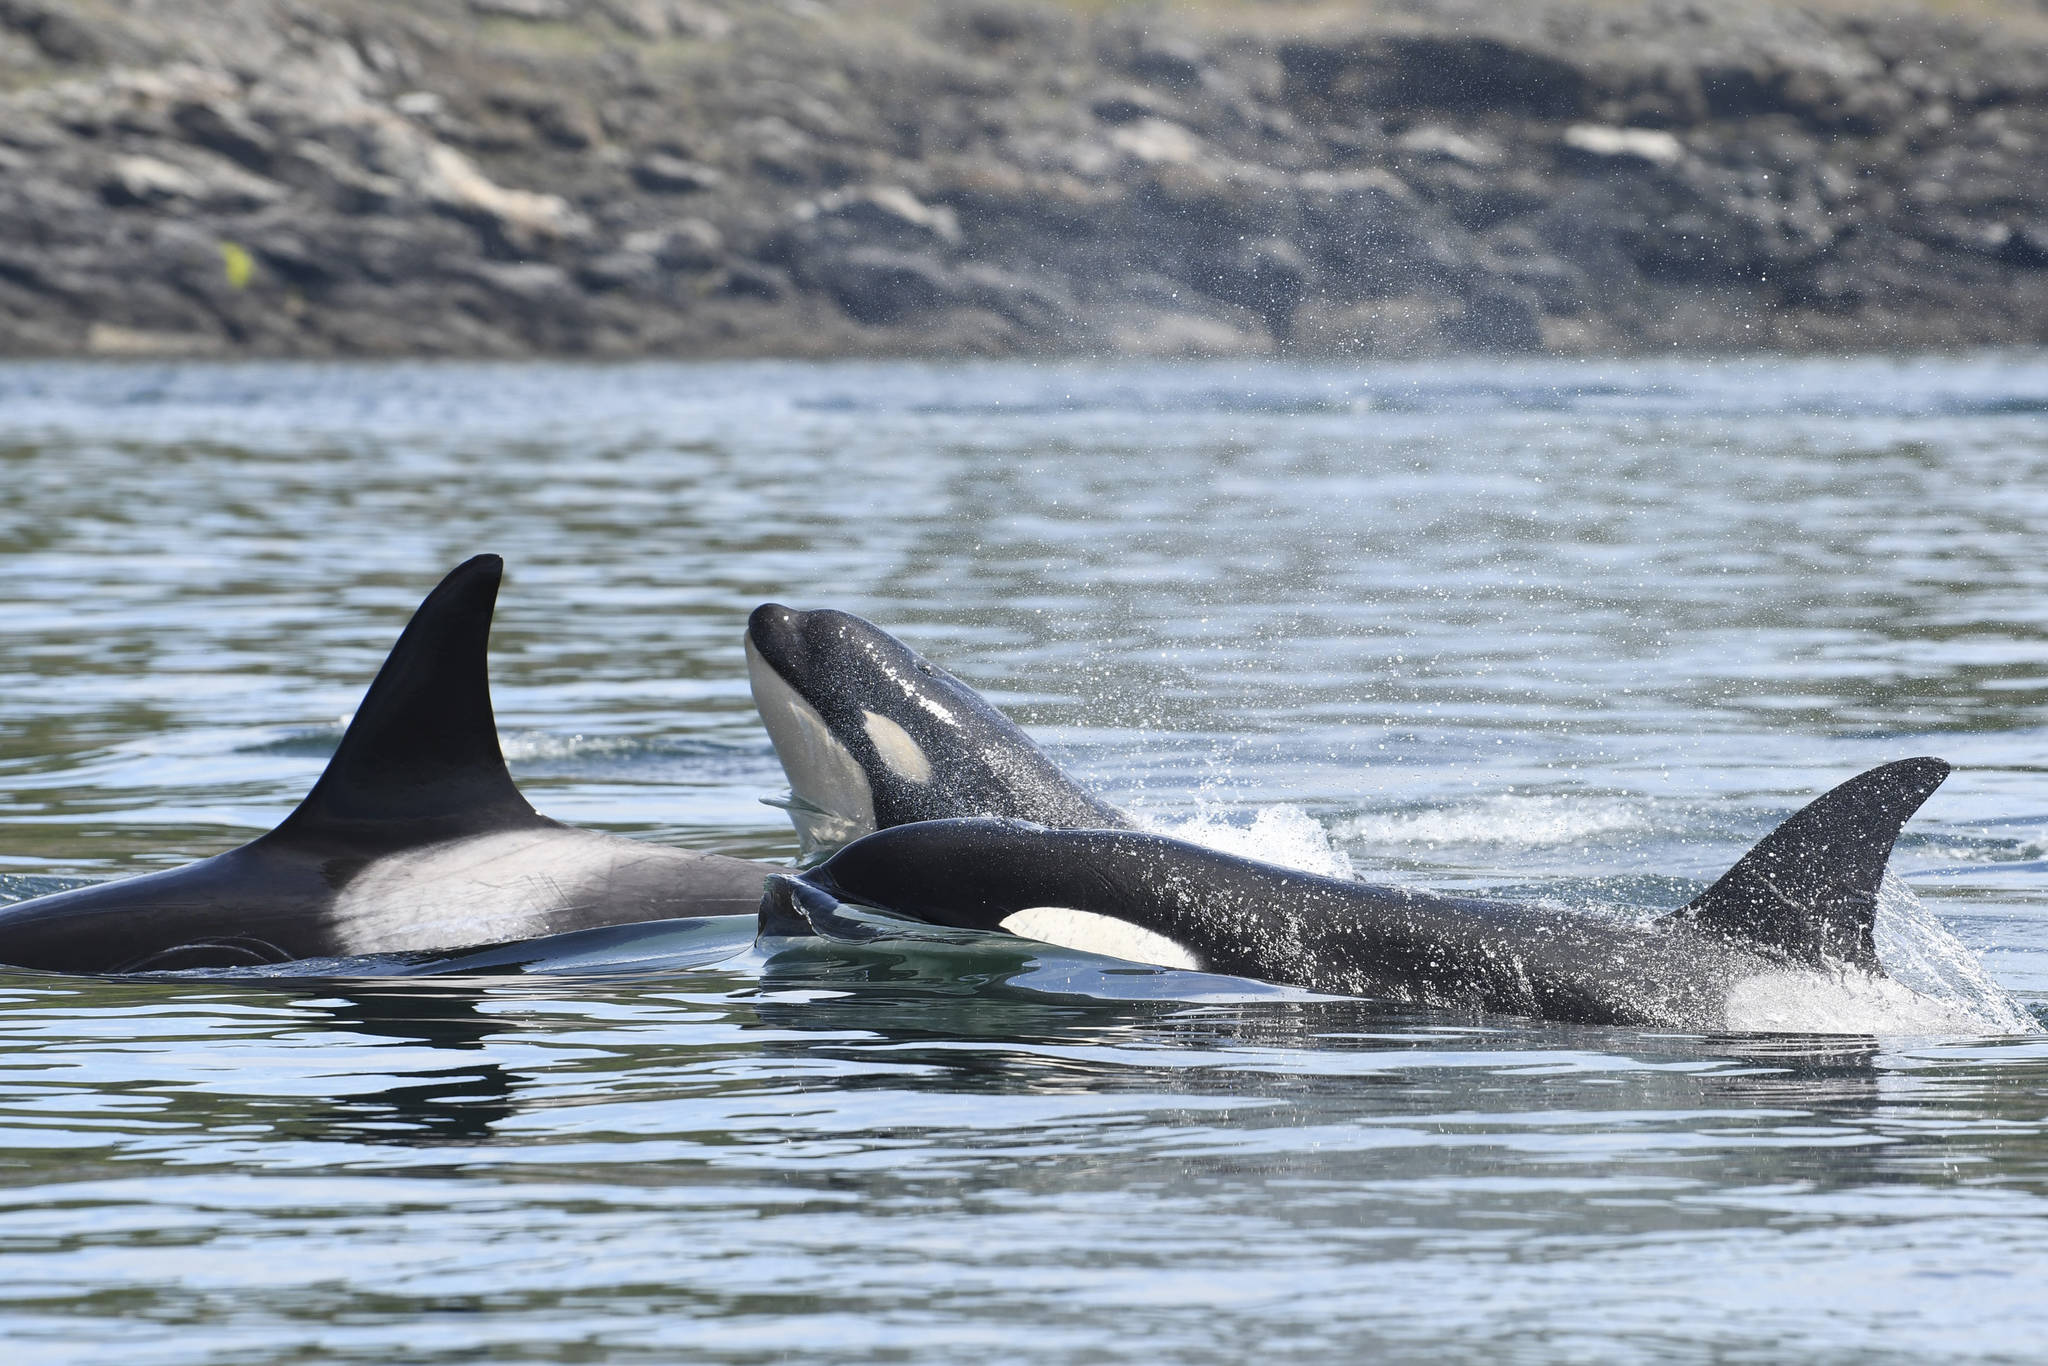 Transient orca sightings on the rise near San Juan Islands